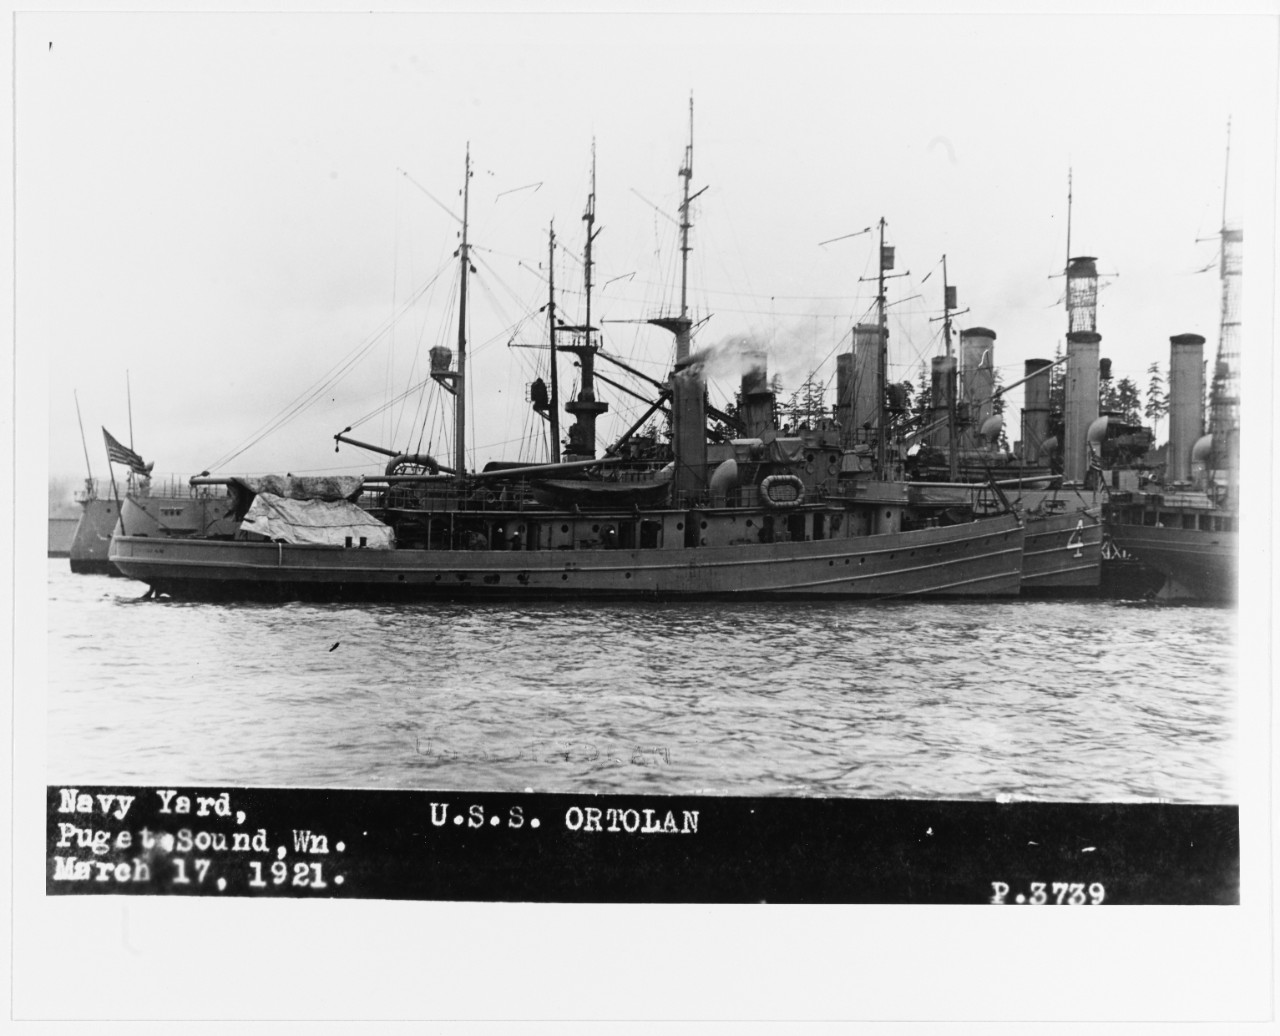 USS ORTOLAN (AM-45)